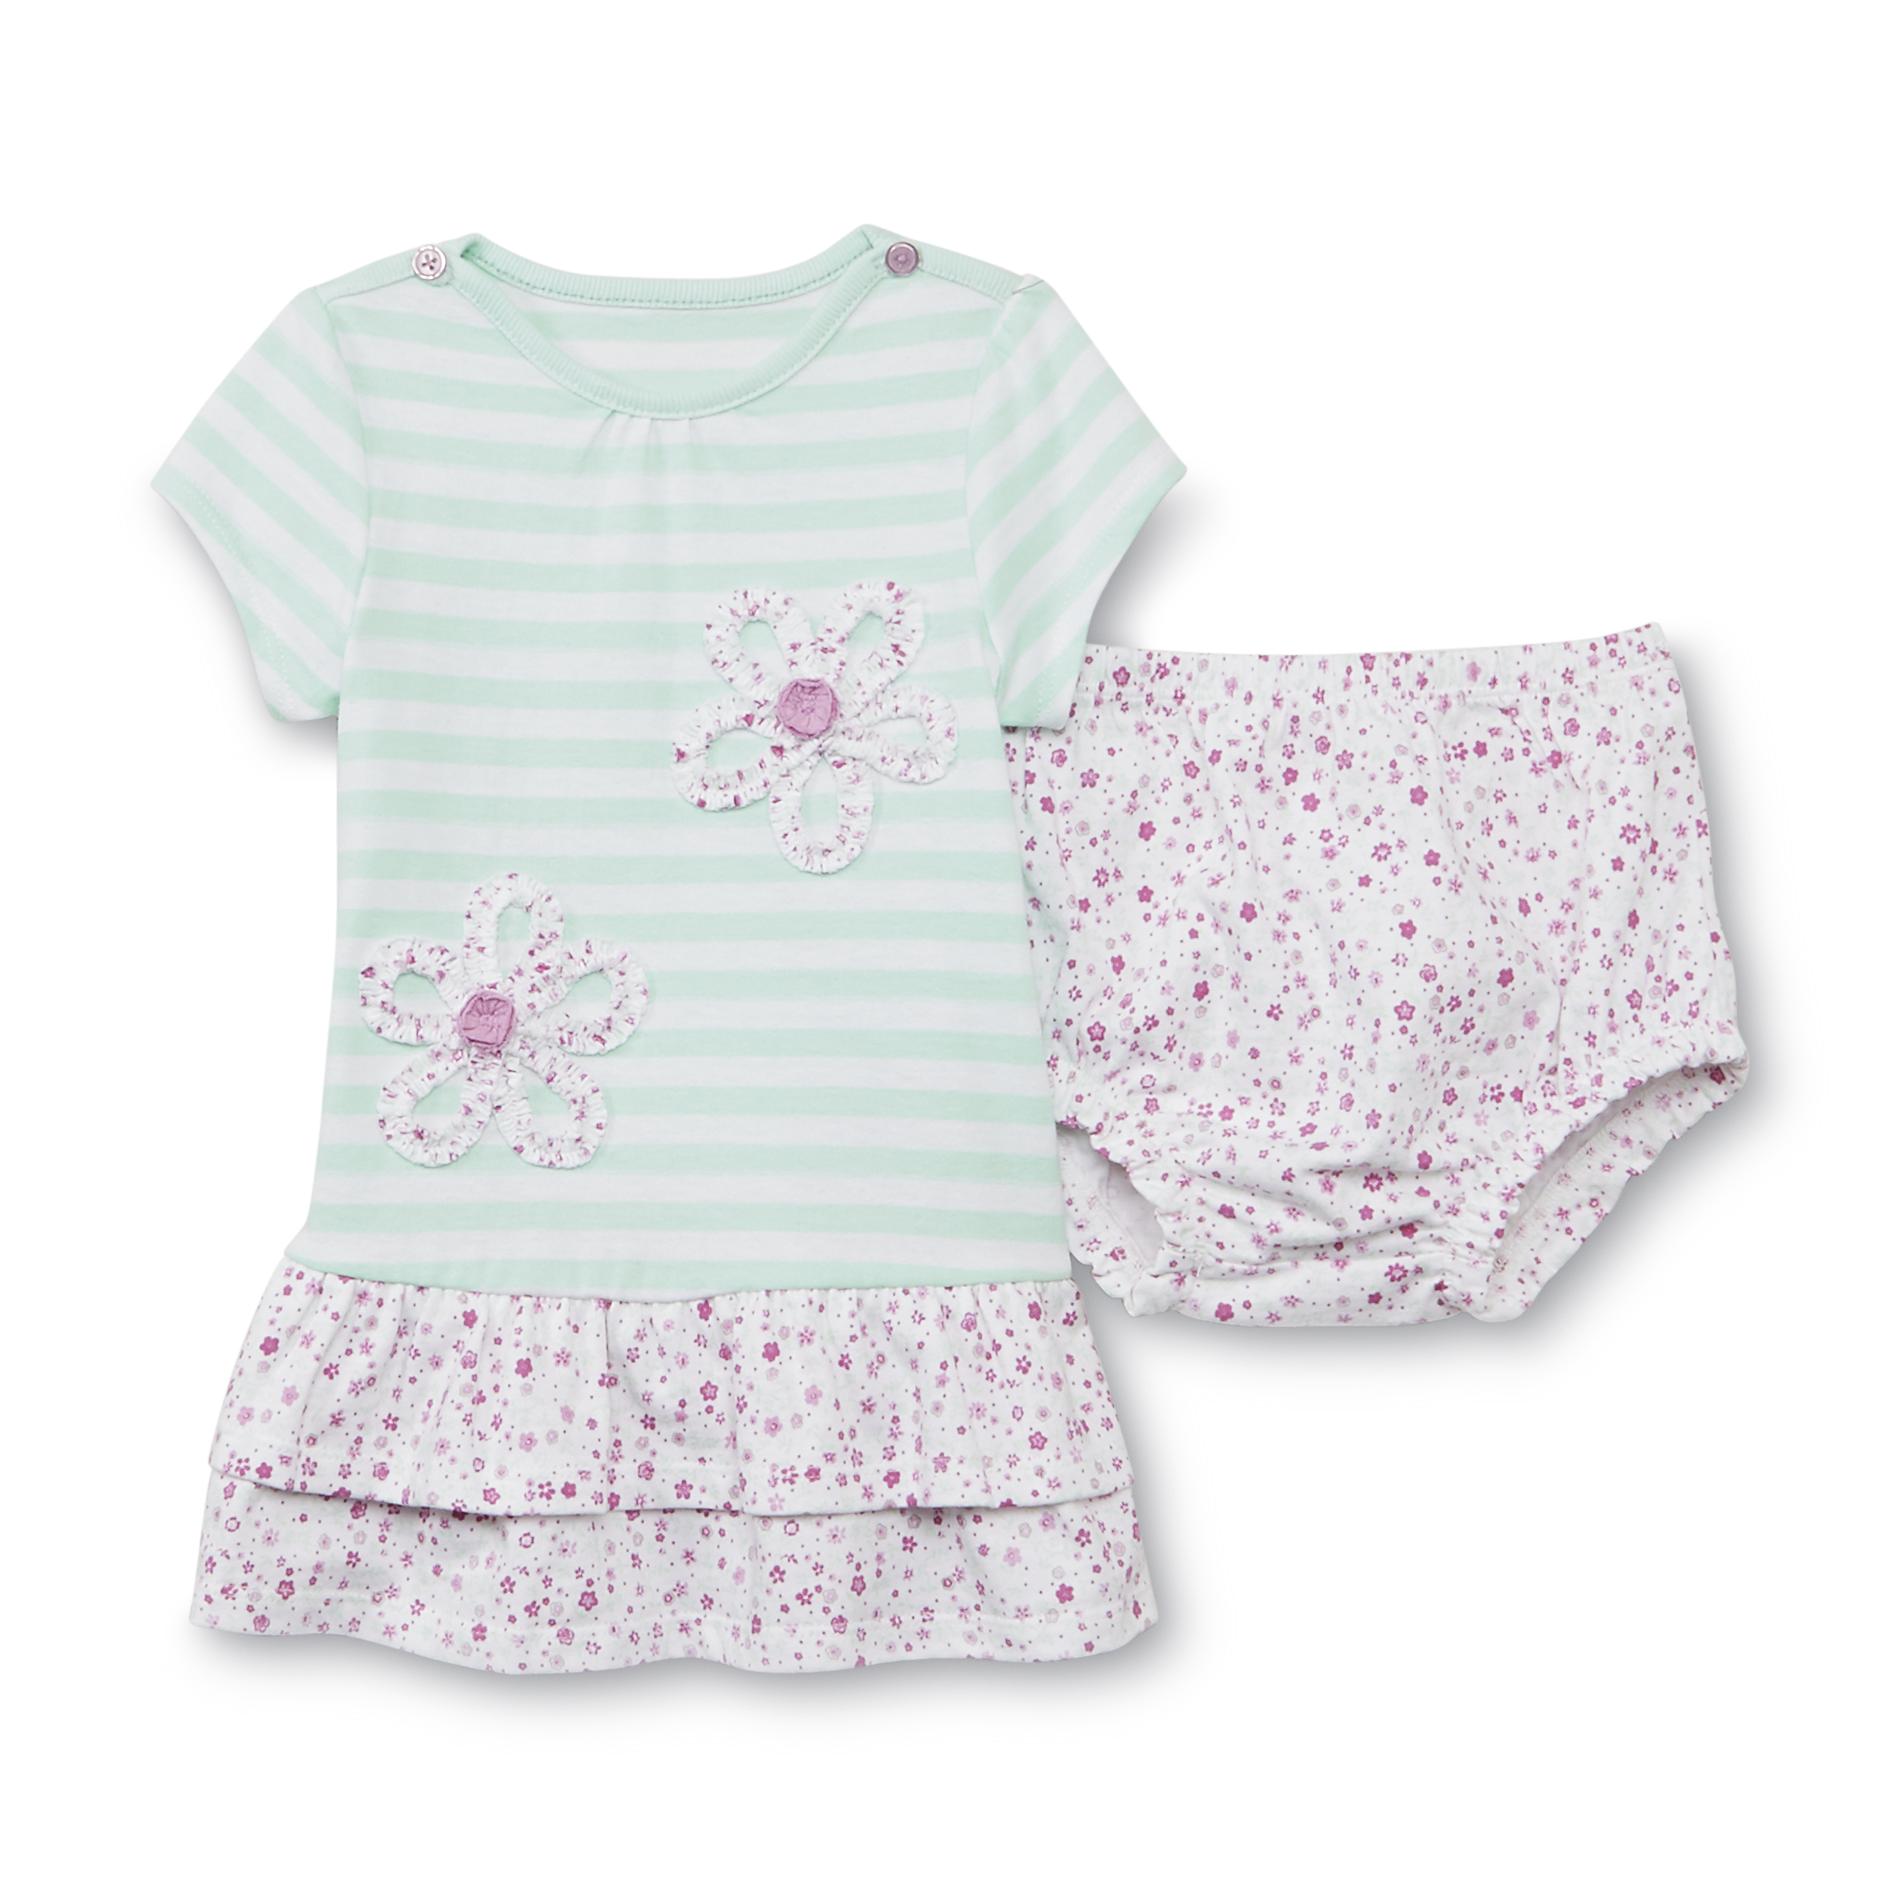 Little Wonders Newborn & Infant Girl's Knit Dress & Diaper Cover - Floral